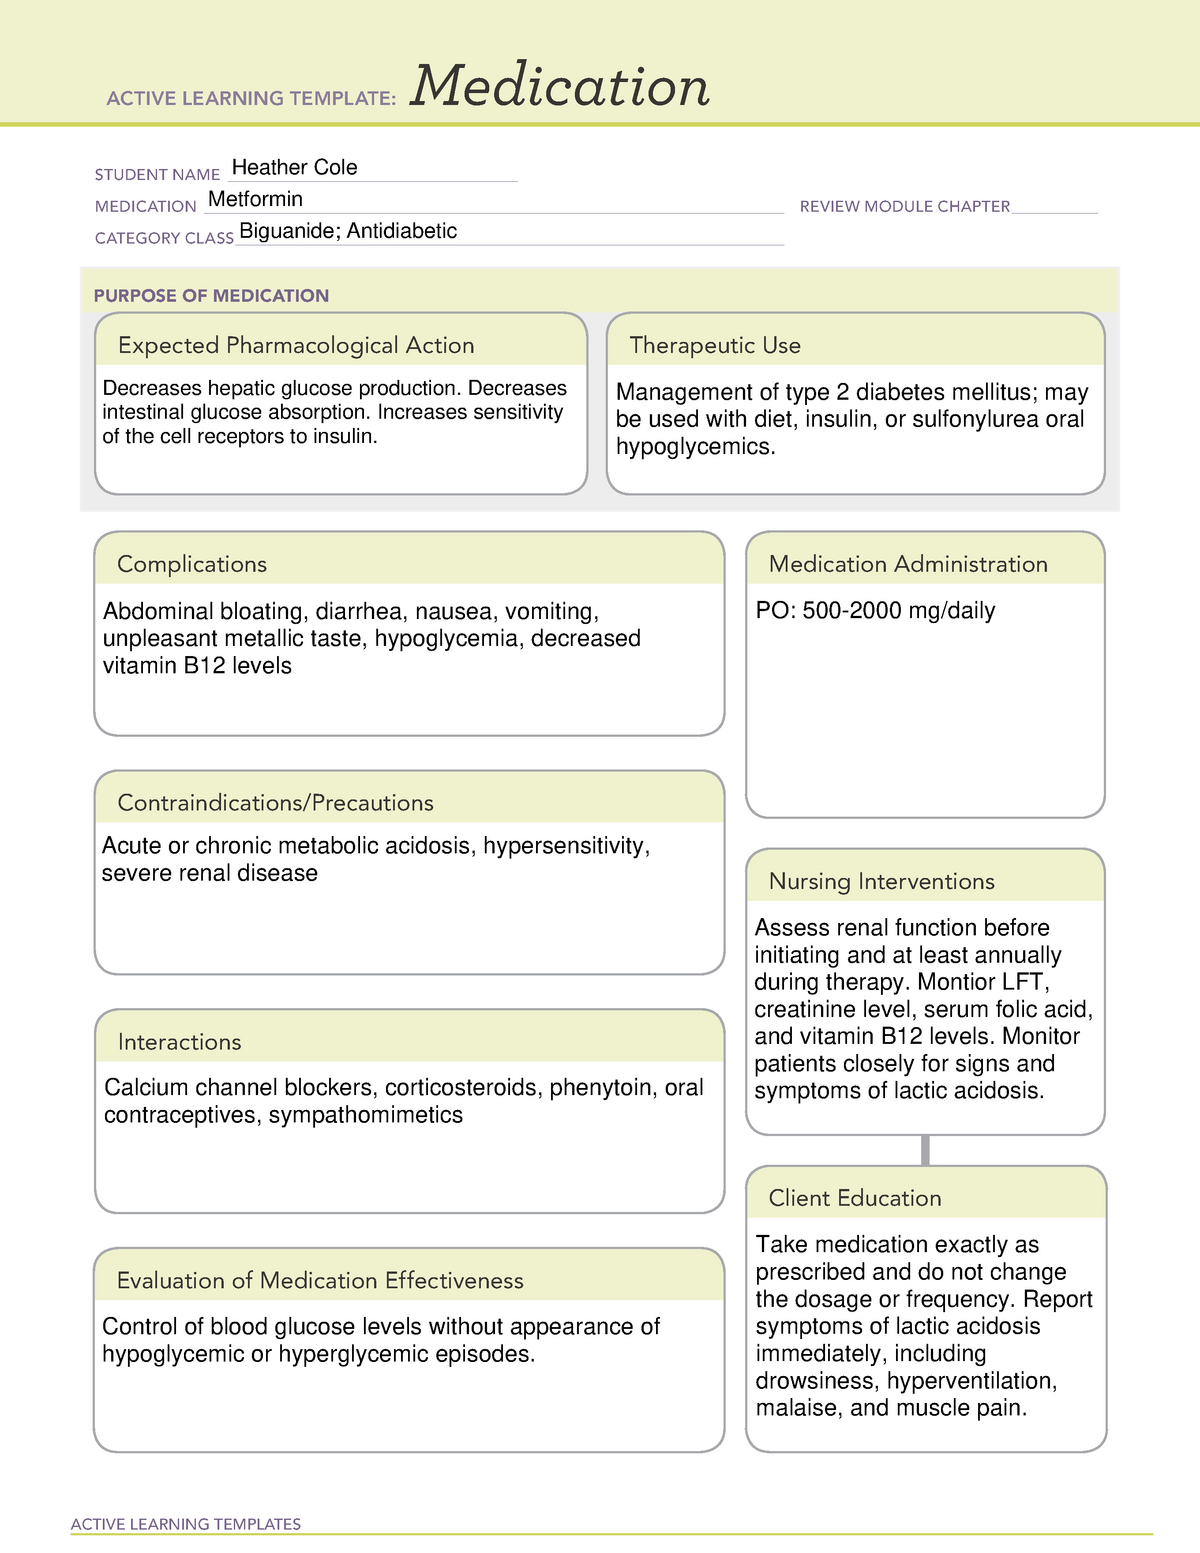 metformin-drug-cards-active-learning-templates-medication-student